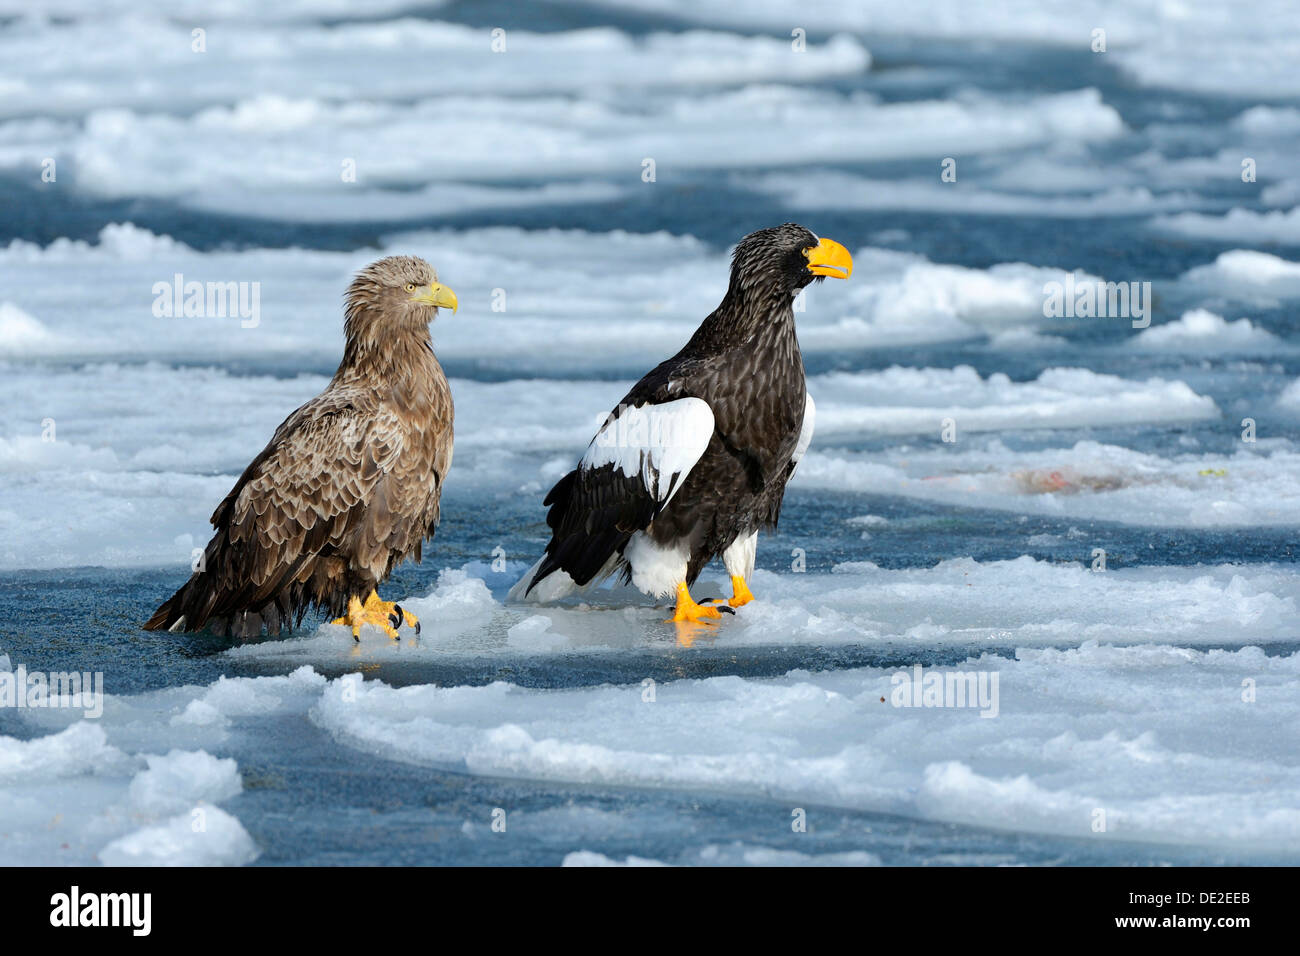 Steller's Sea Eagle (Haliaeetus pelagicus) and a White-tailed Eagle or Sea Eagle (Haliaeetus albicilla) perched on an ice floe Stock Photo